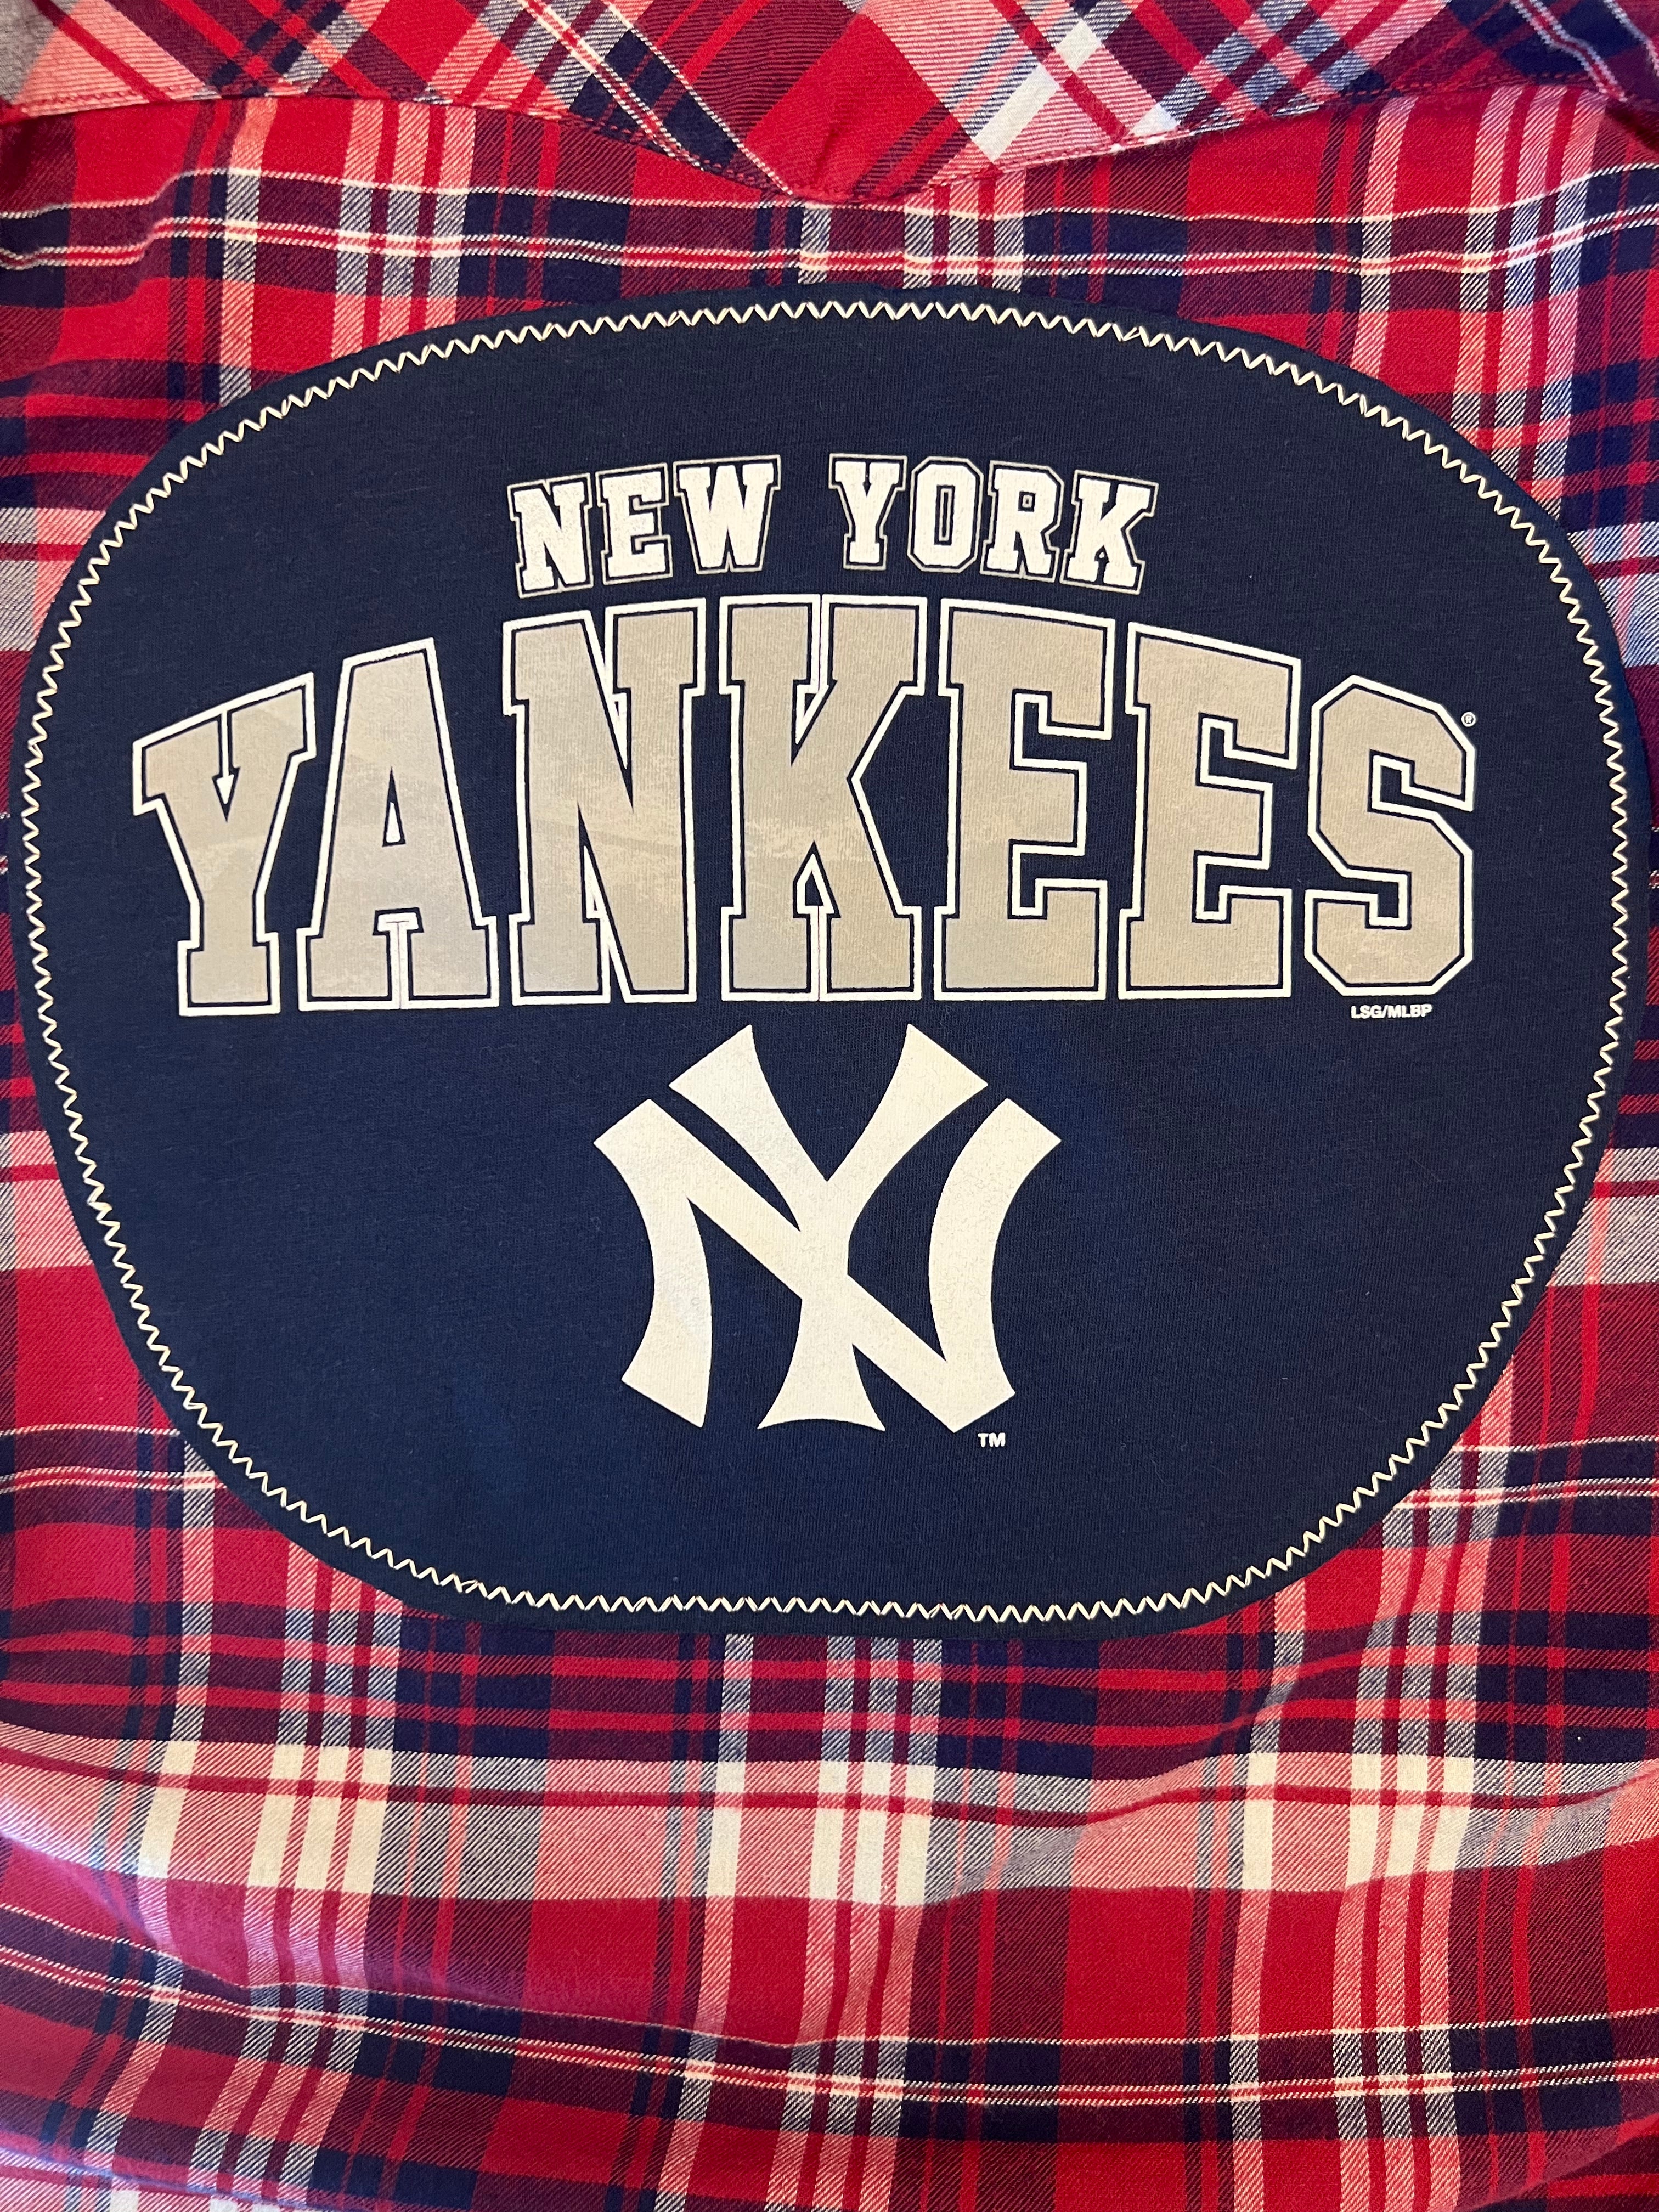 Yankees! (Women's - Size L)